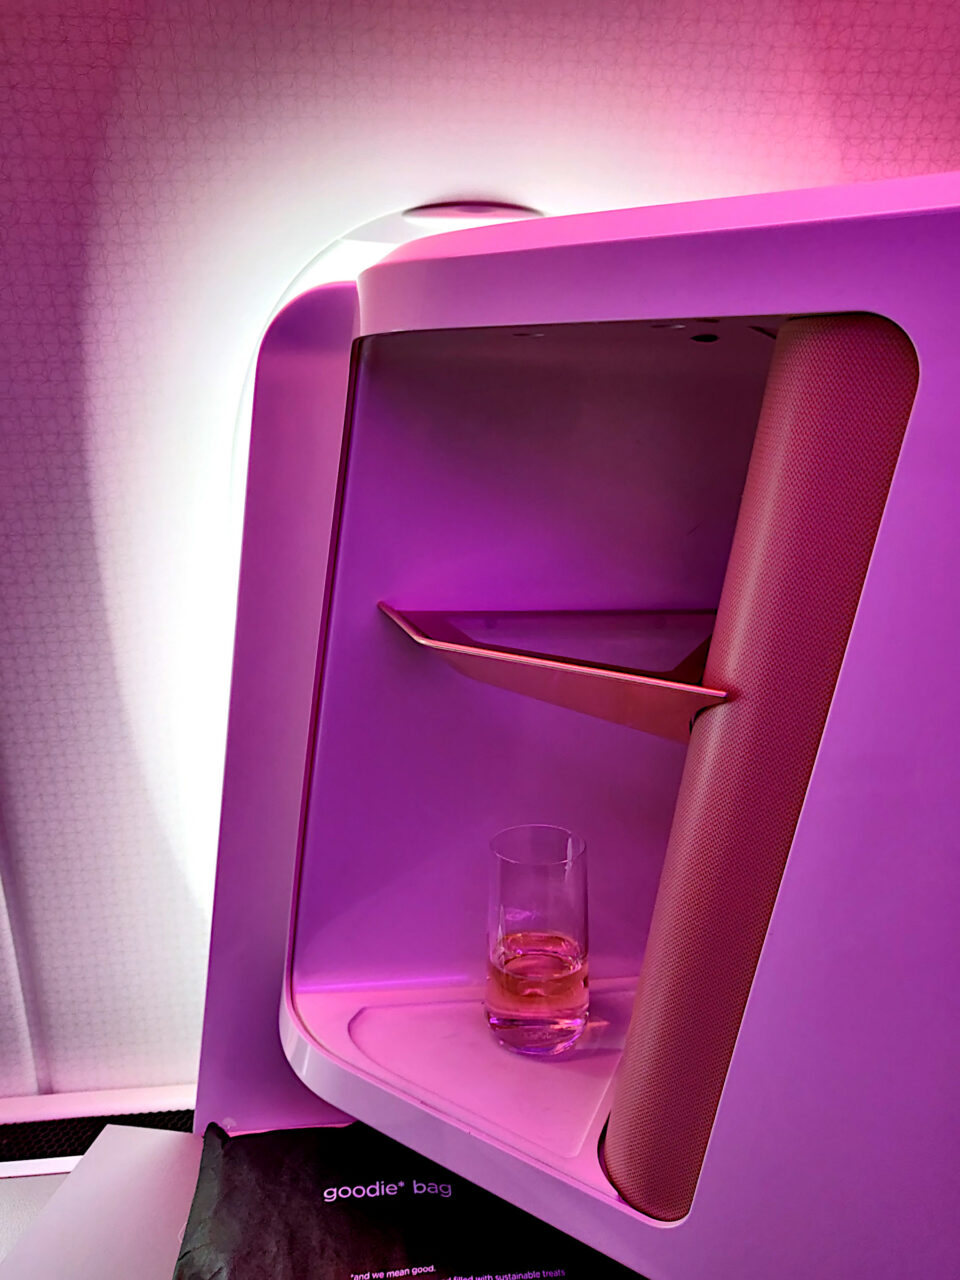 Virgin Atlantic Upper Class Suite drinks tray 